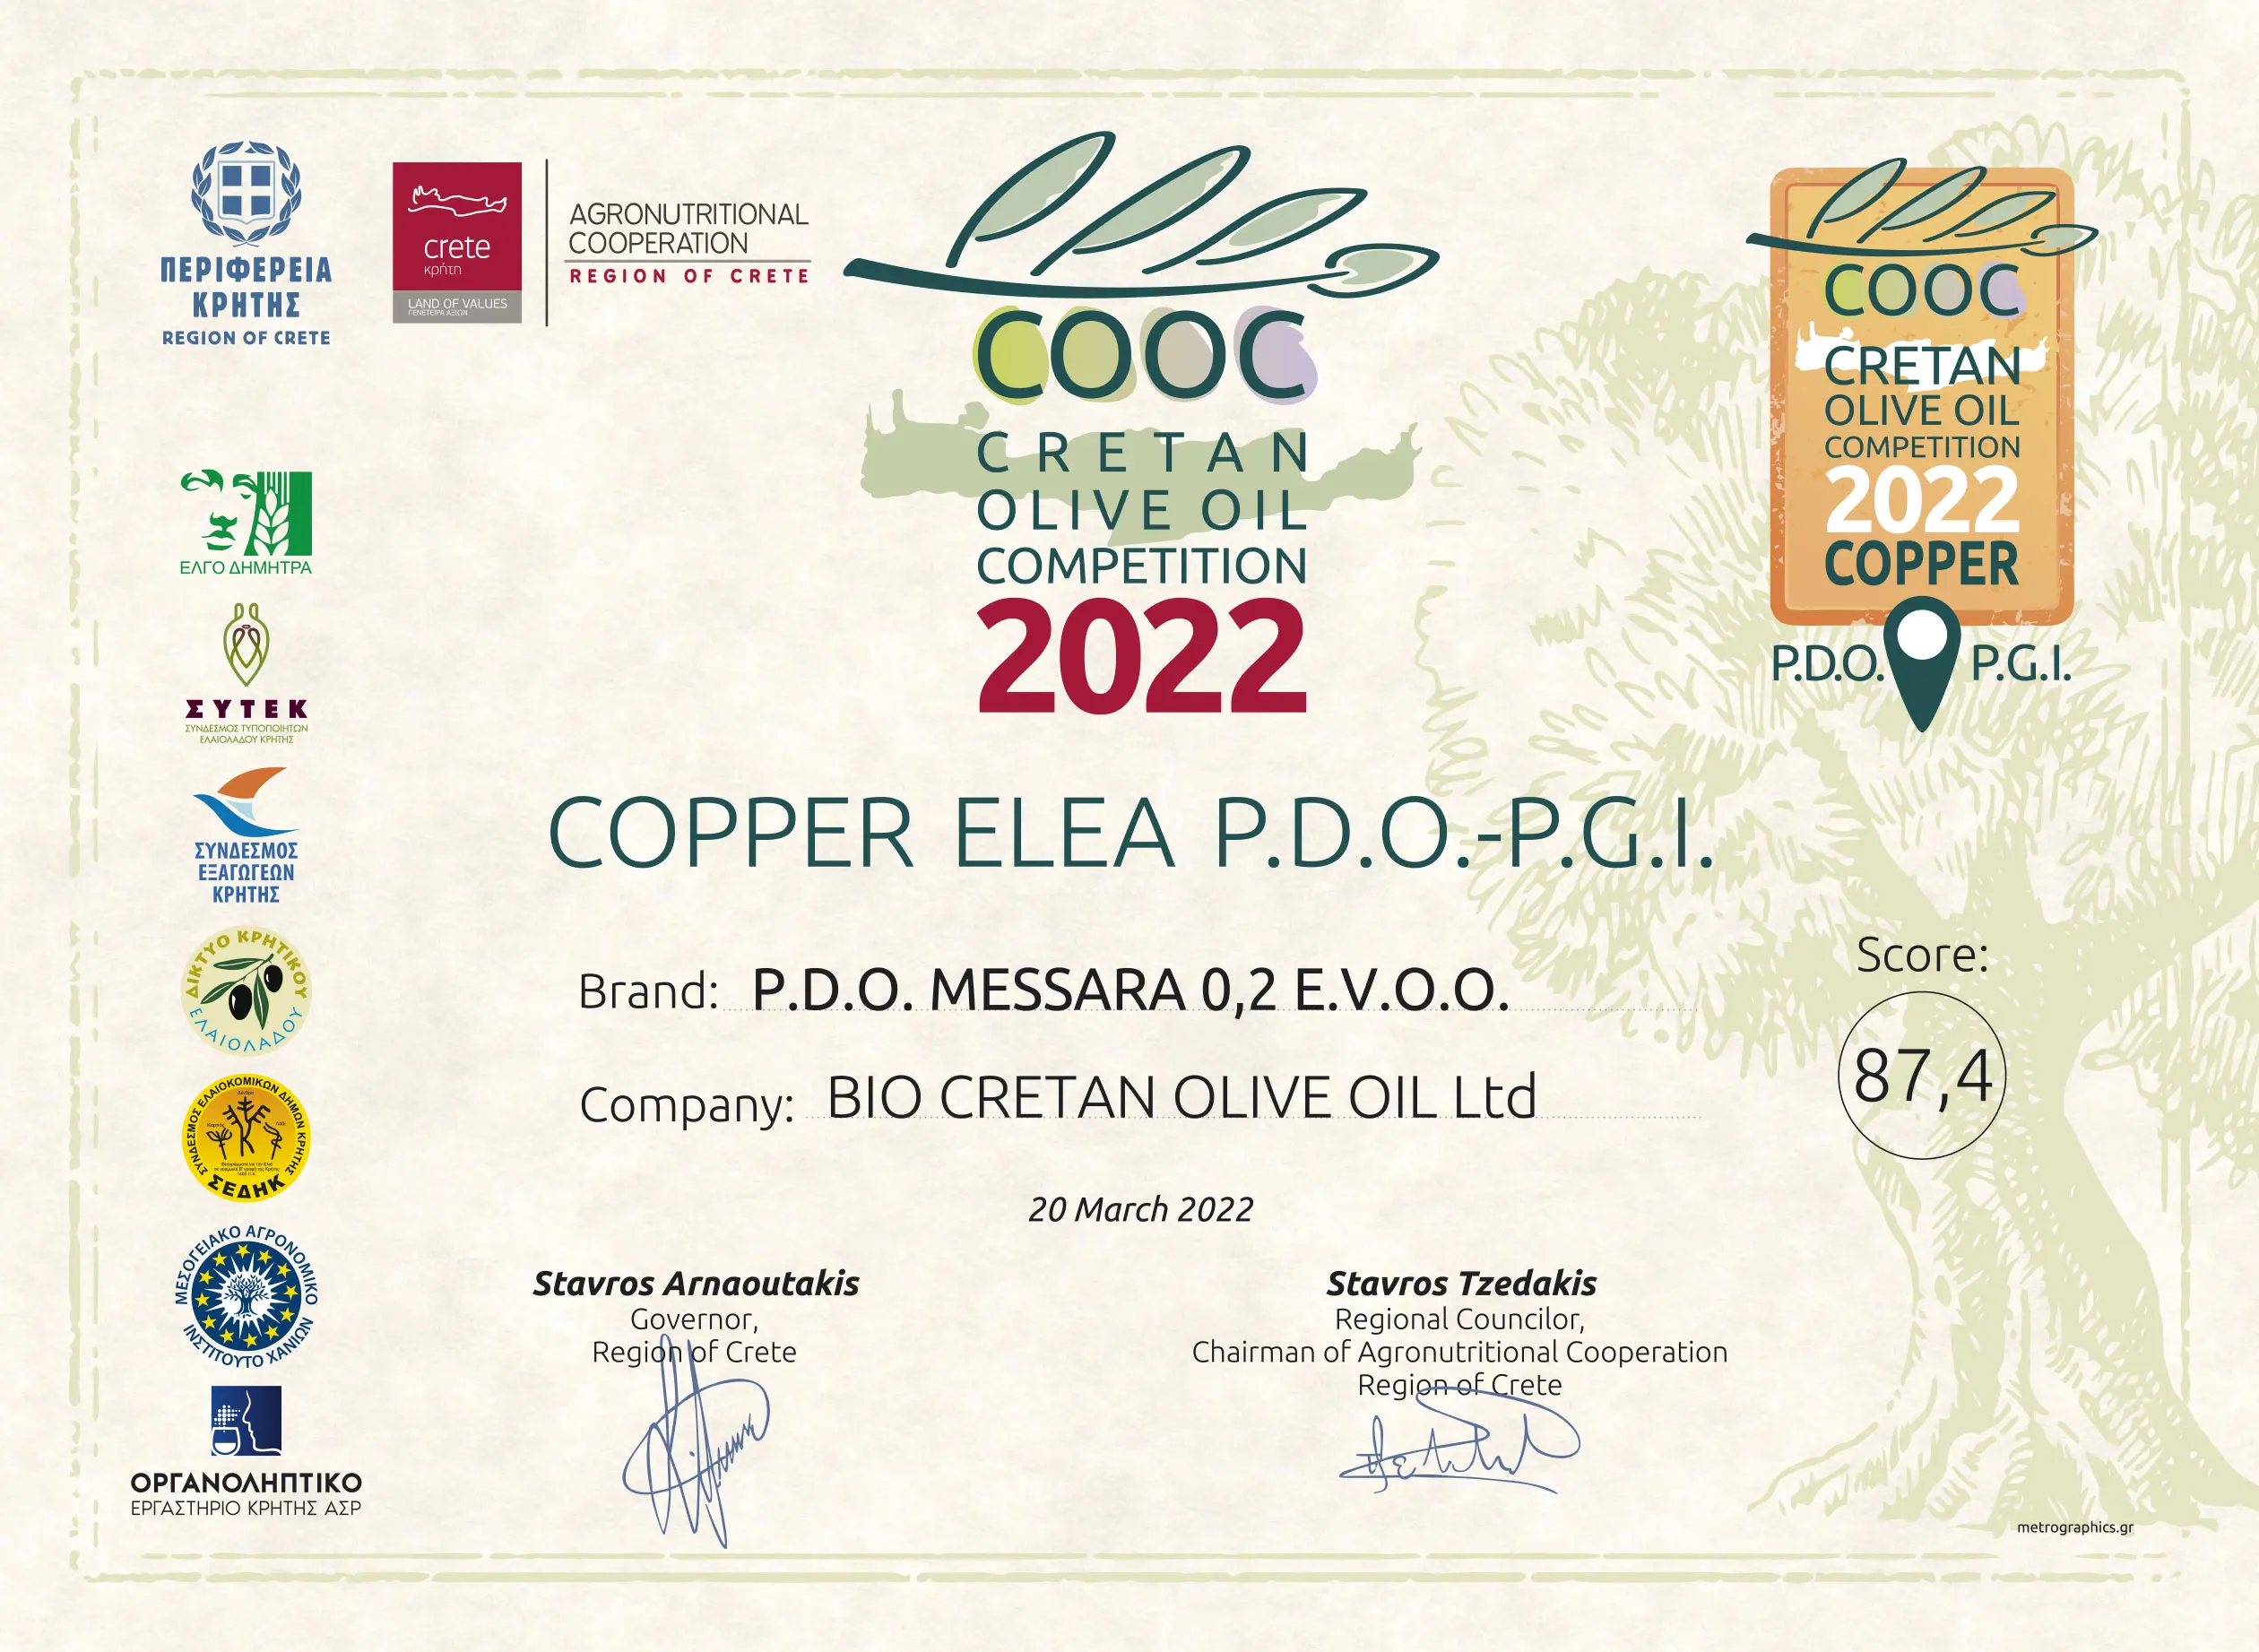 COOC - Cretan Olive Oil-konkurranse